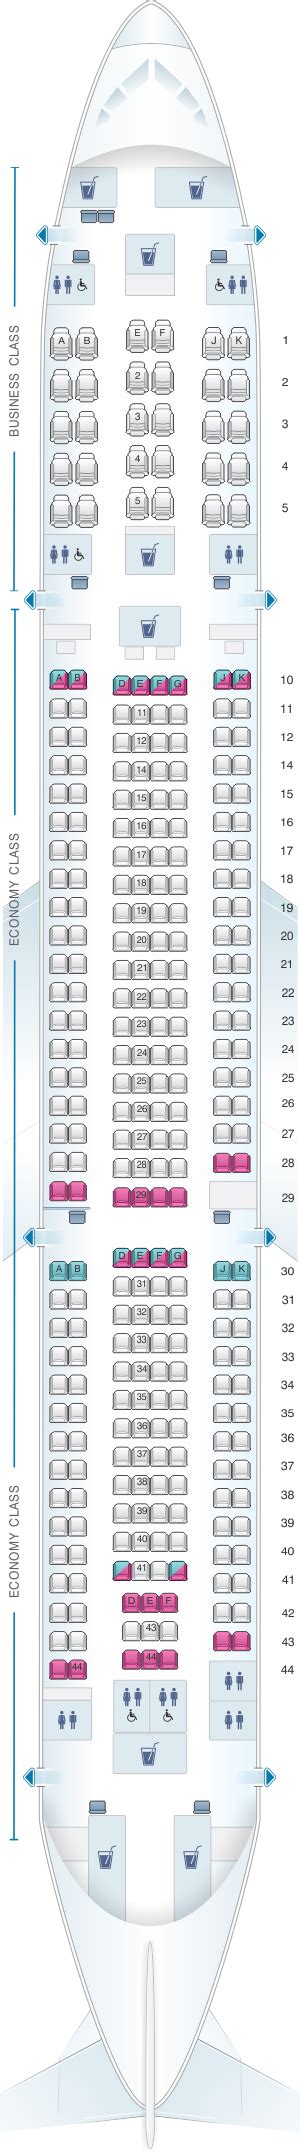 Qatar Airways A330 Seat Map